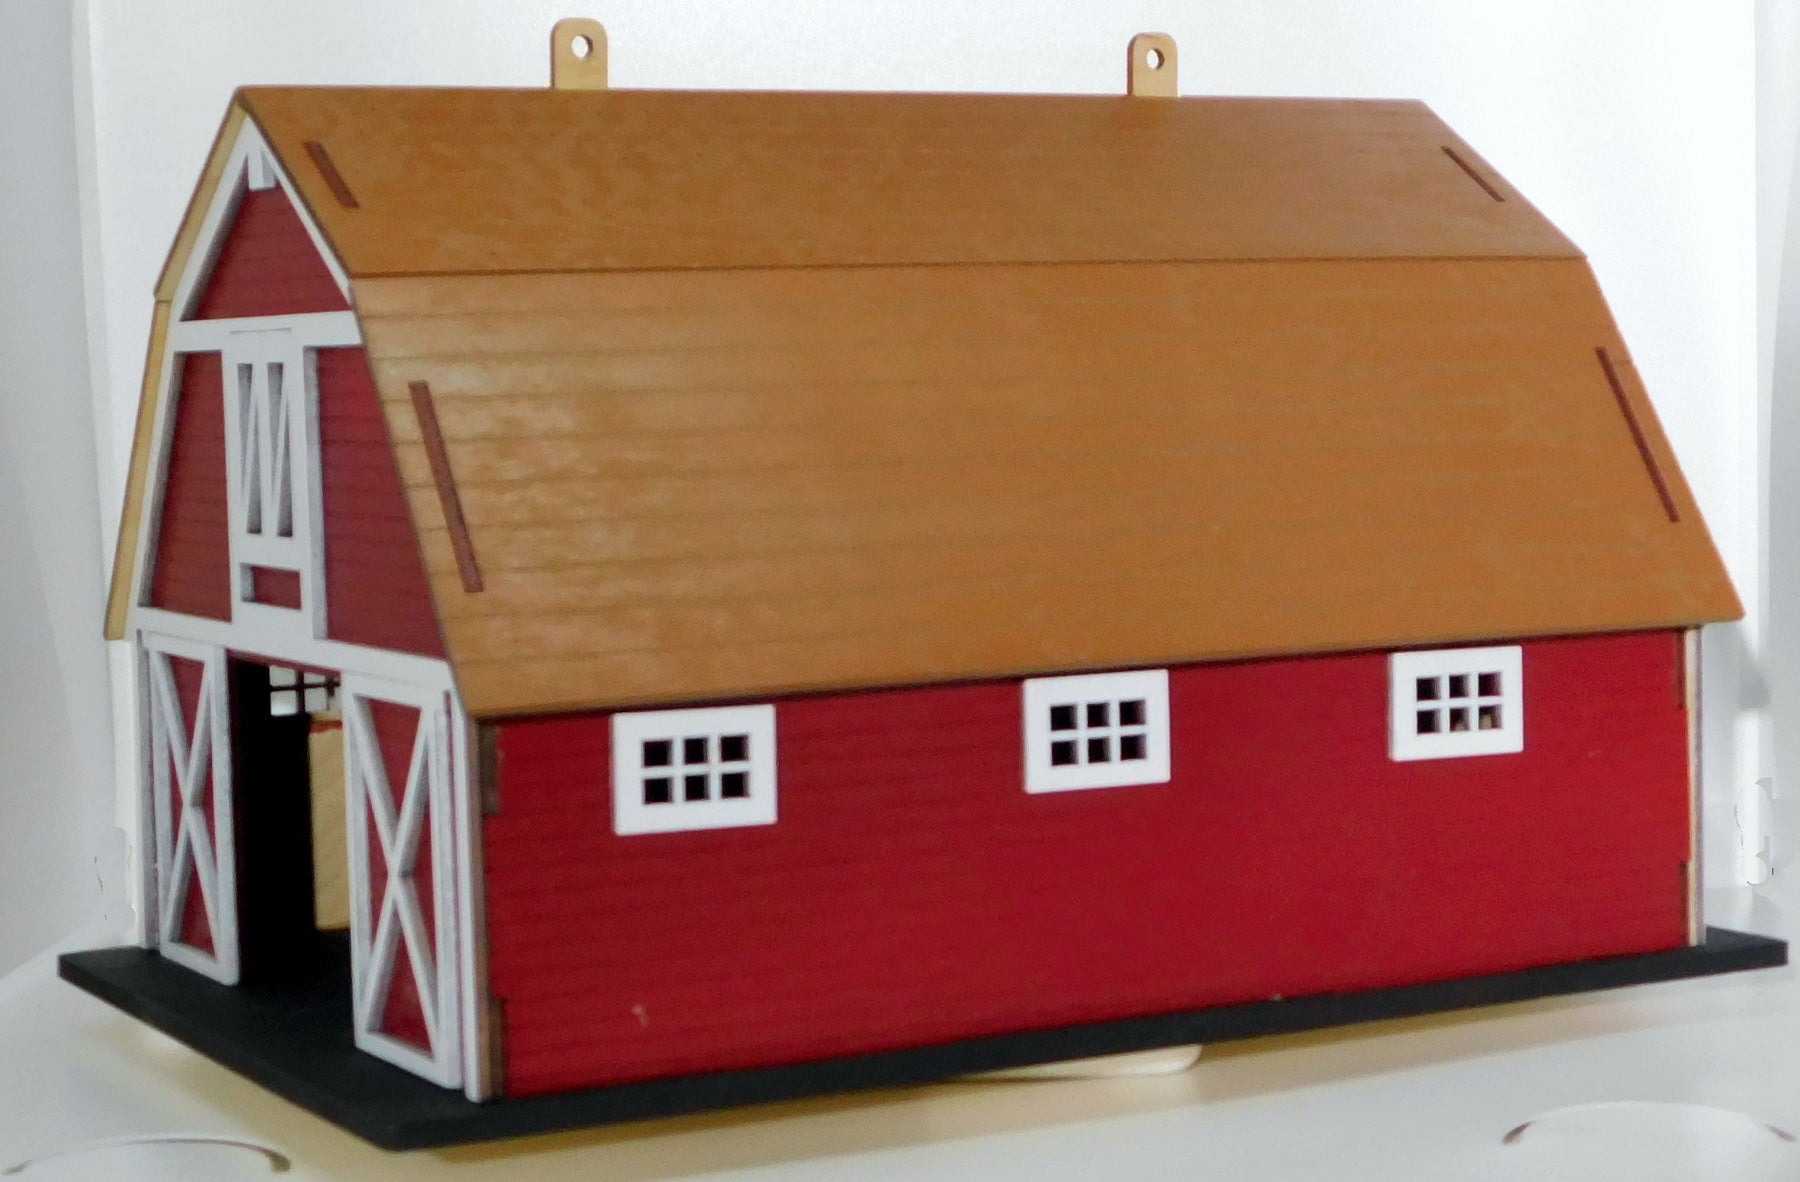 Gambrel Roof Barn Birdhouse Kit